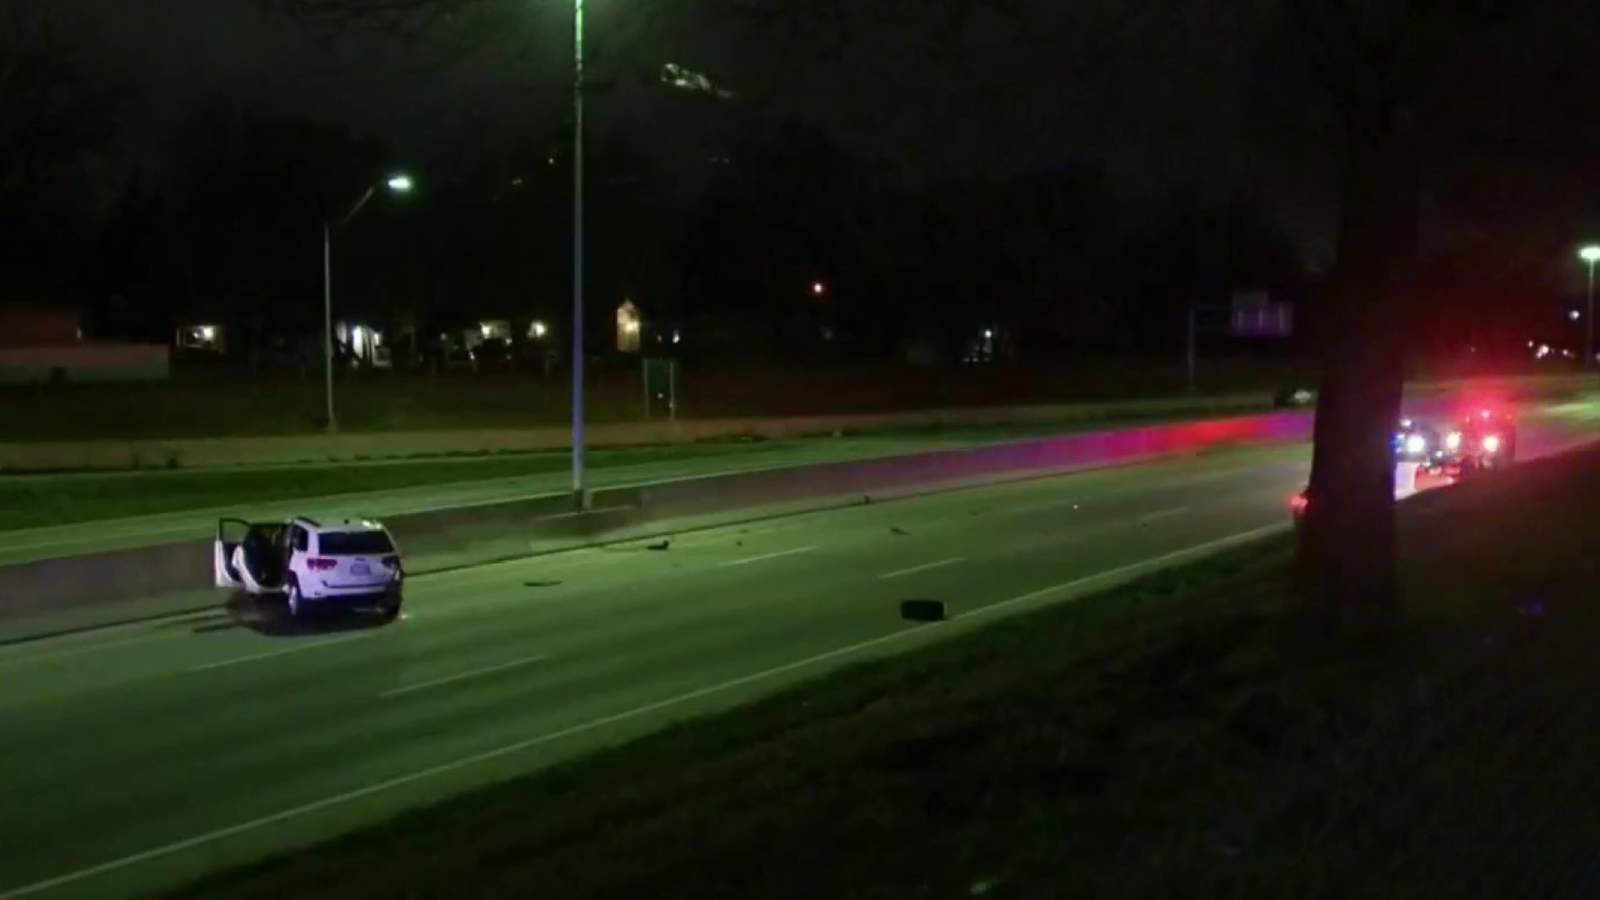 Shooting victim’s vehicle blocks lane, causes crash on Southfield Freeway